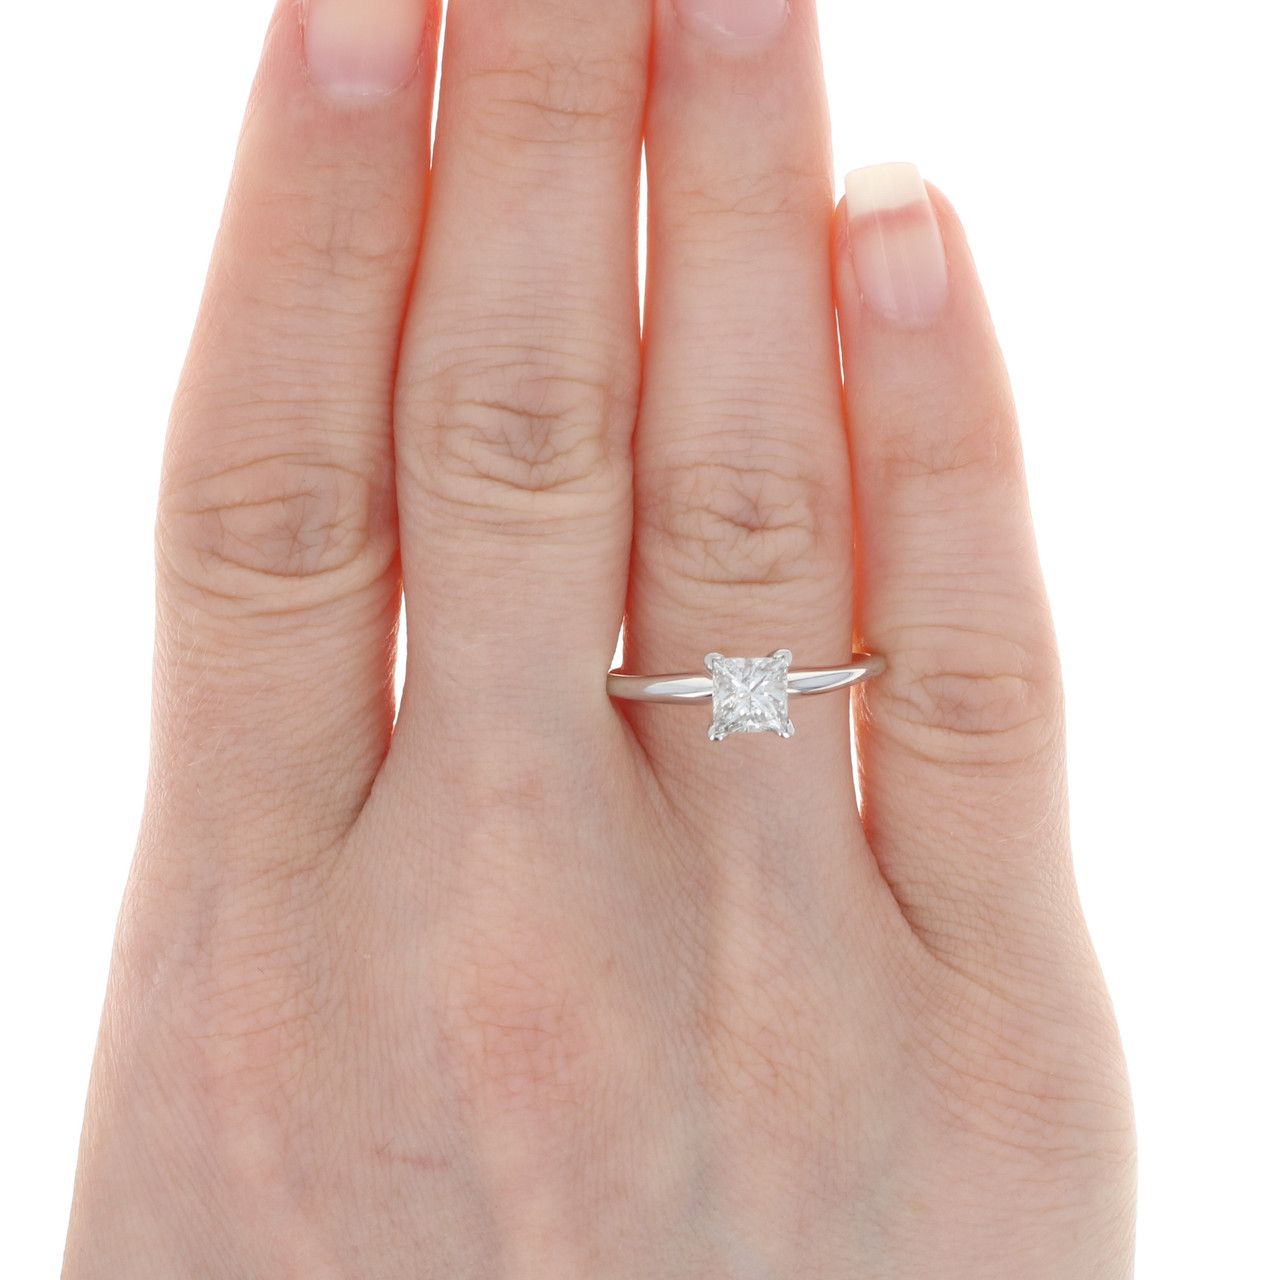 Women's Engagement 1.04 Carat Princess Cut Diamond Wedding Ring at Rs  96000/piece in Surat